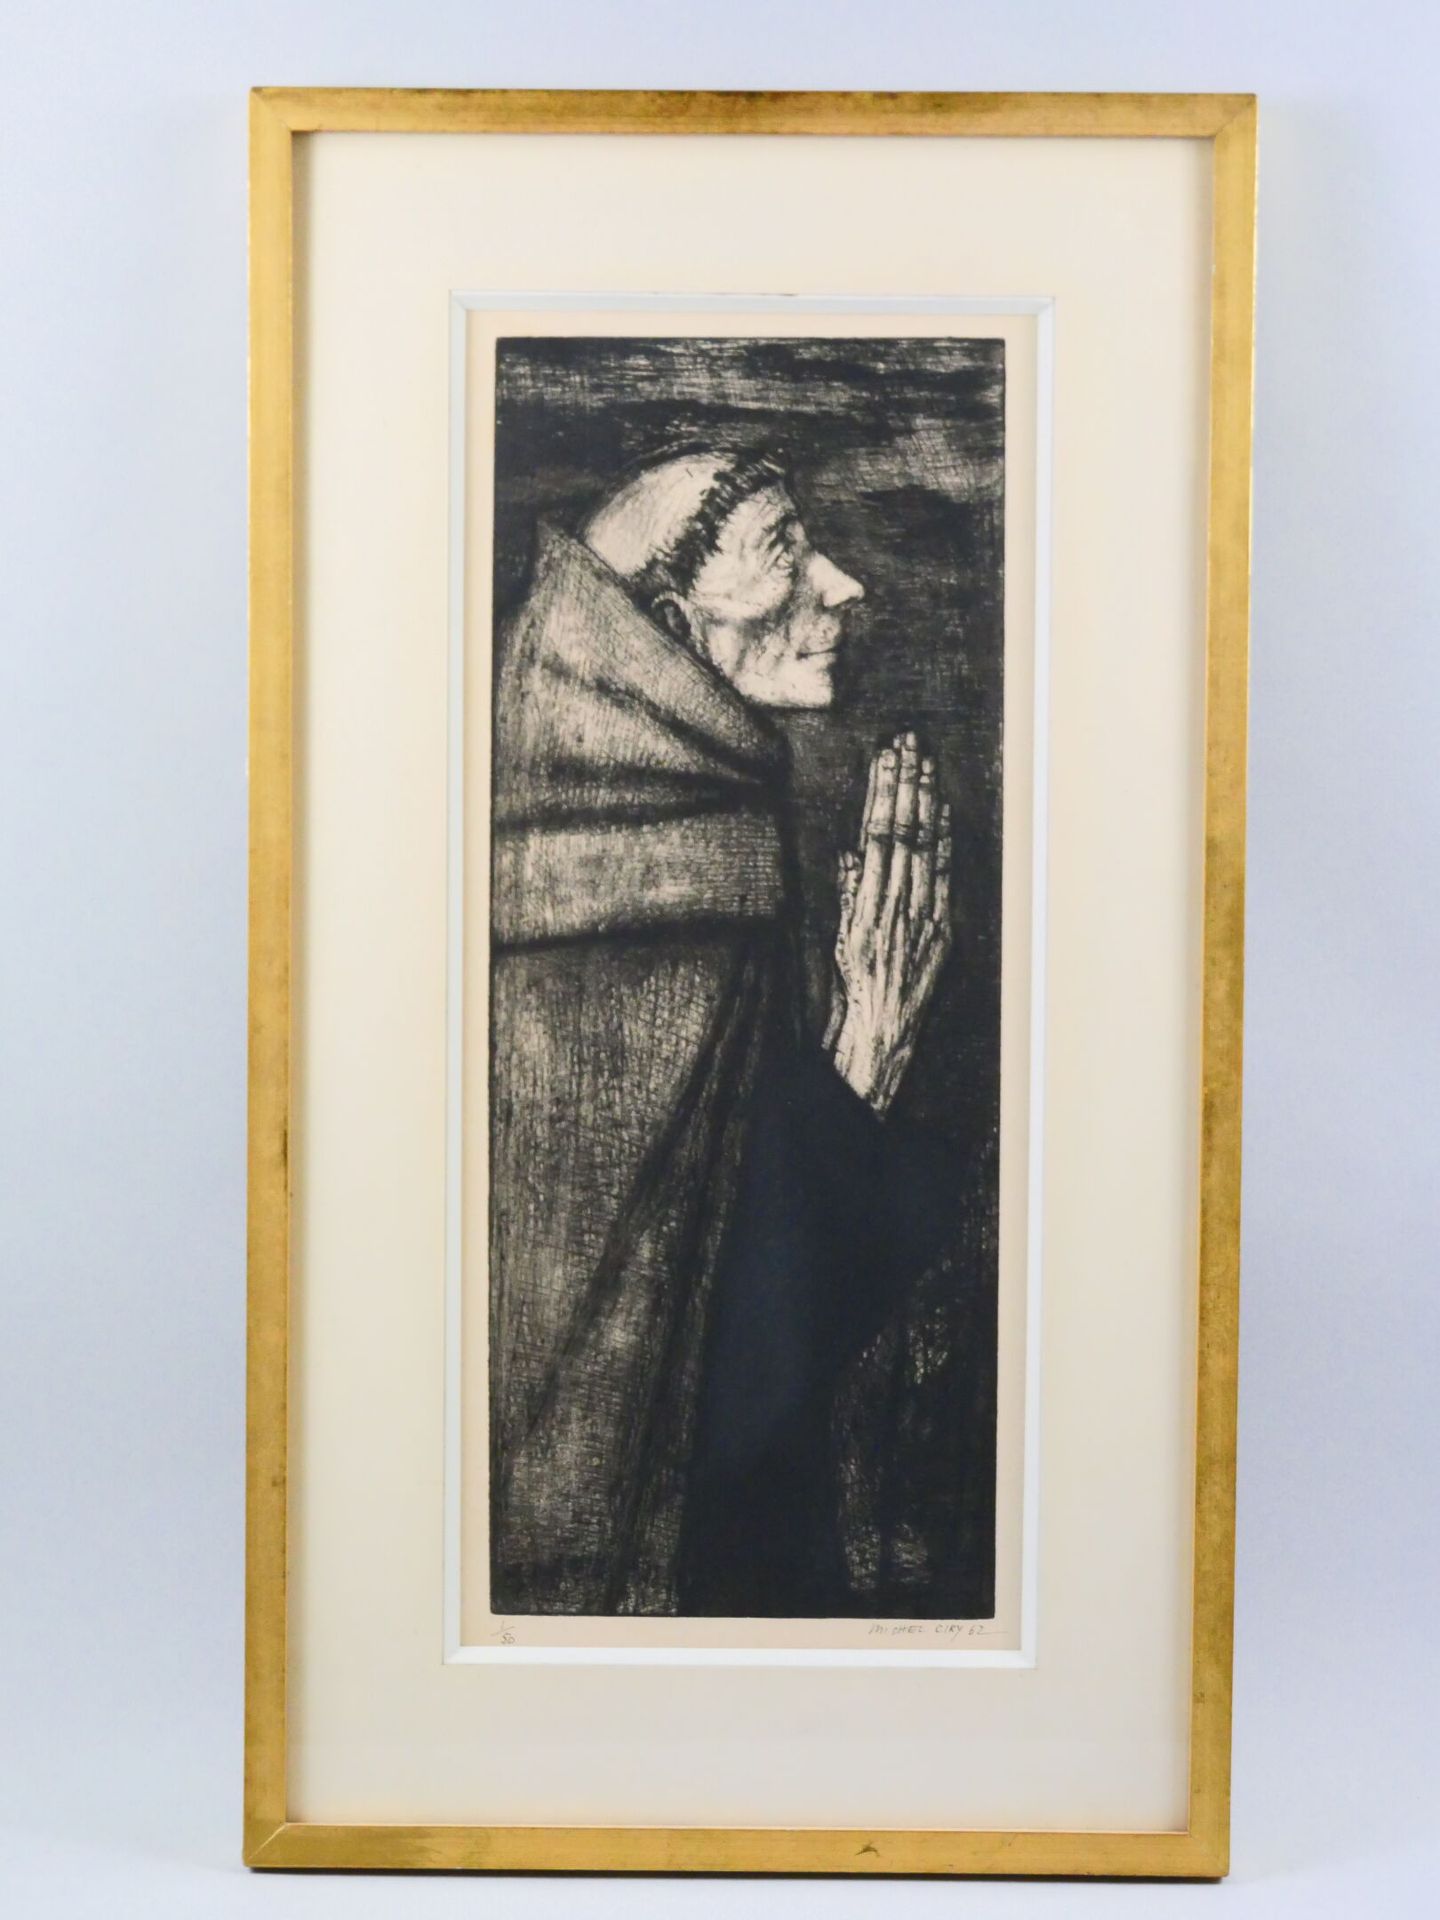 Null 米歇尔-西里(1919-2018) 
阿西西的圣弗朗西斯 
黑体雕刻，右下角有签名和日期62，左下角为1/50。 
目测尺寸：53 x 23 cm 
&hellip;